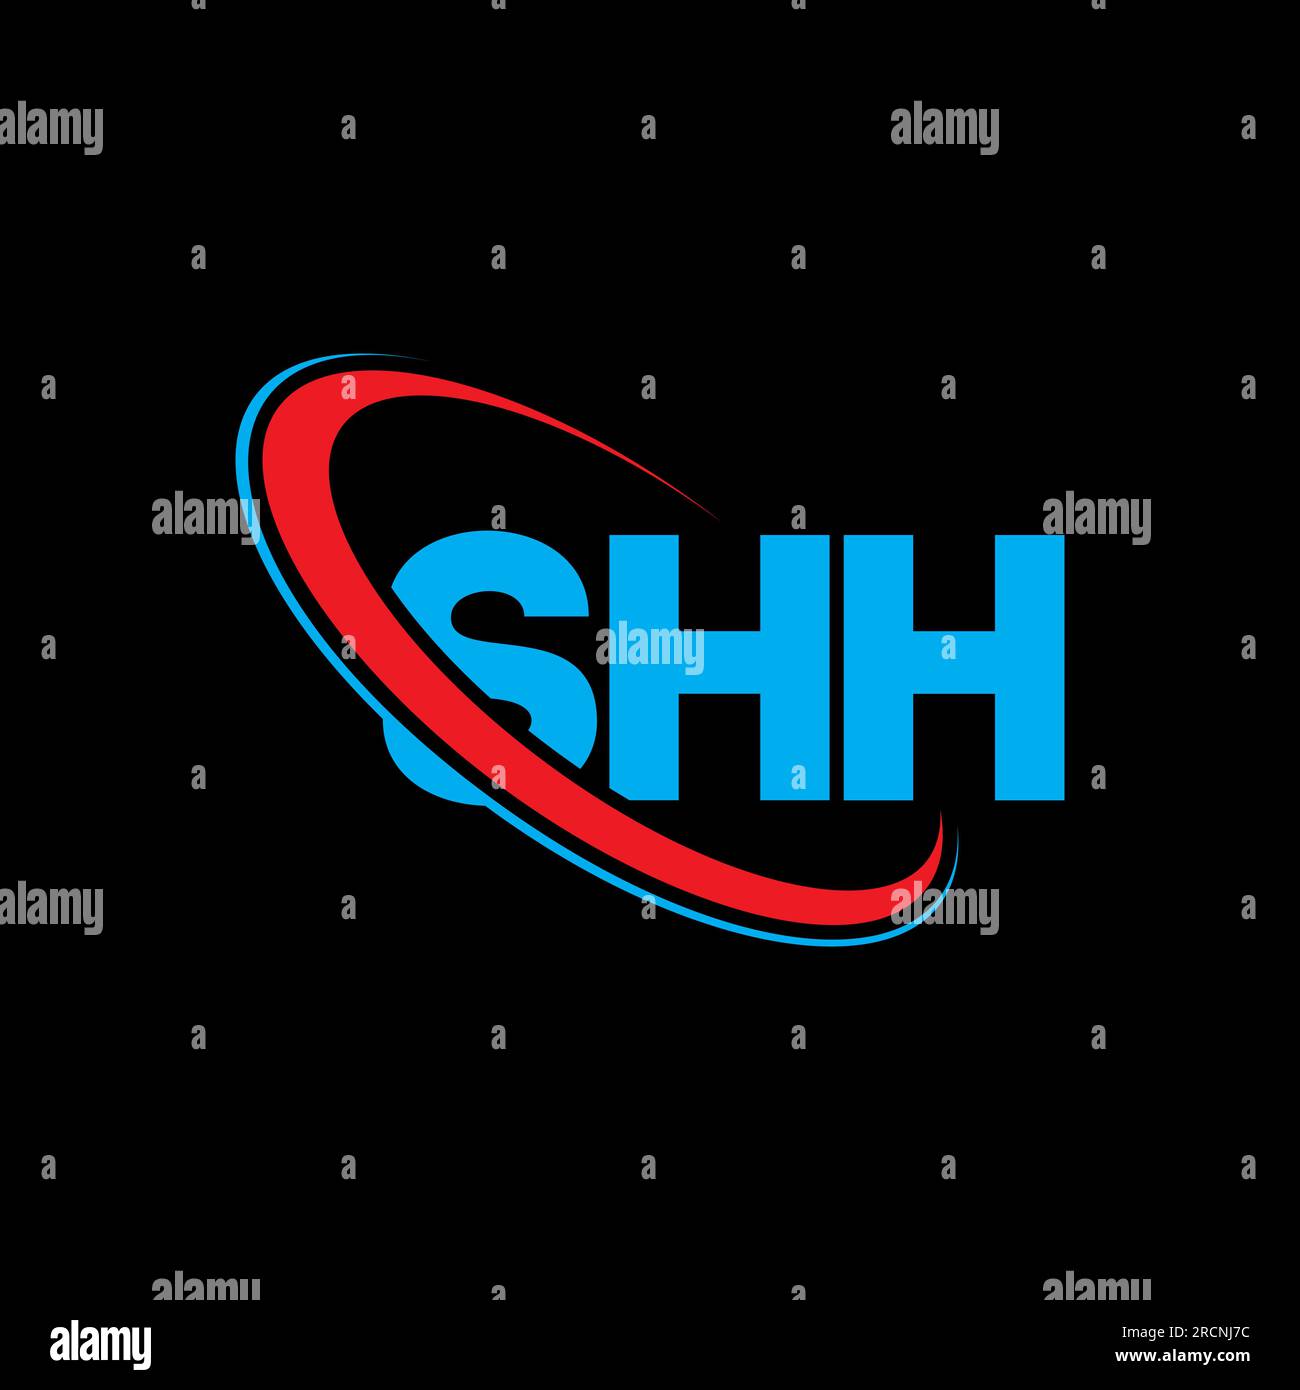 Shh tech logo Stock Vector Images - Alamy